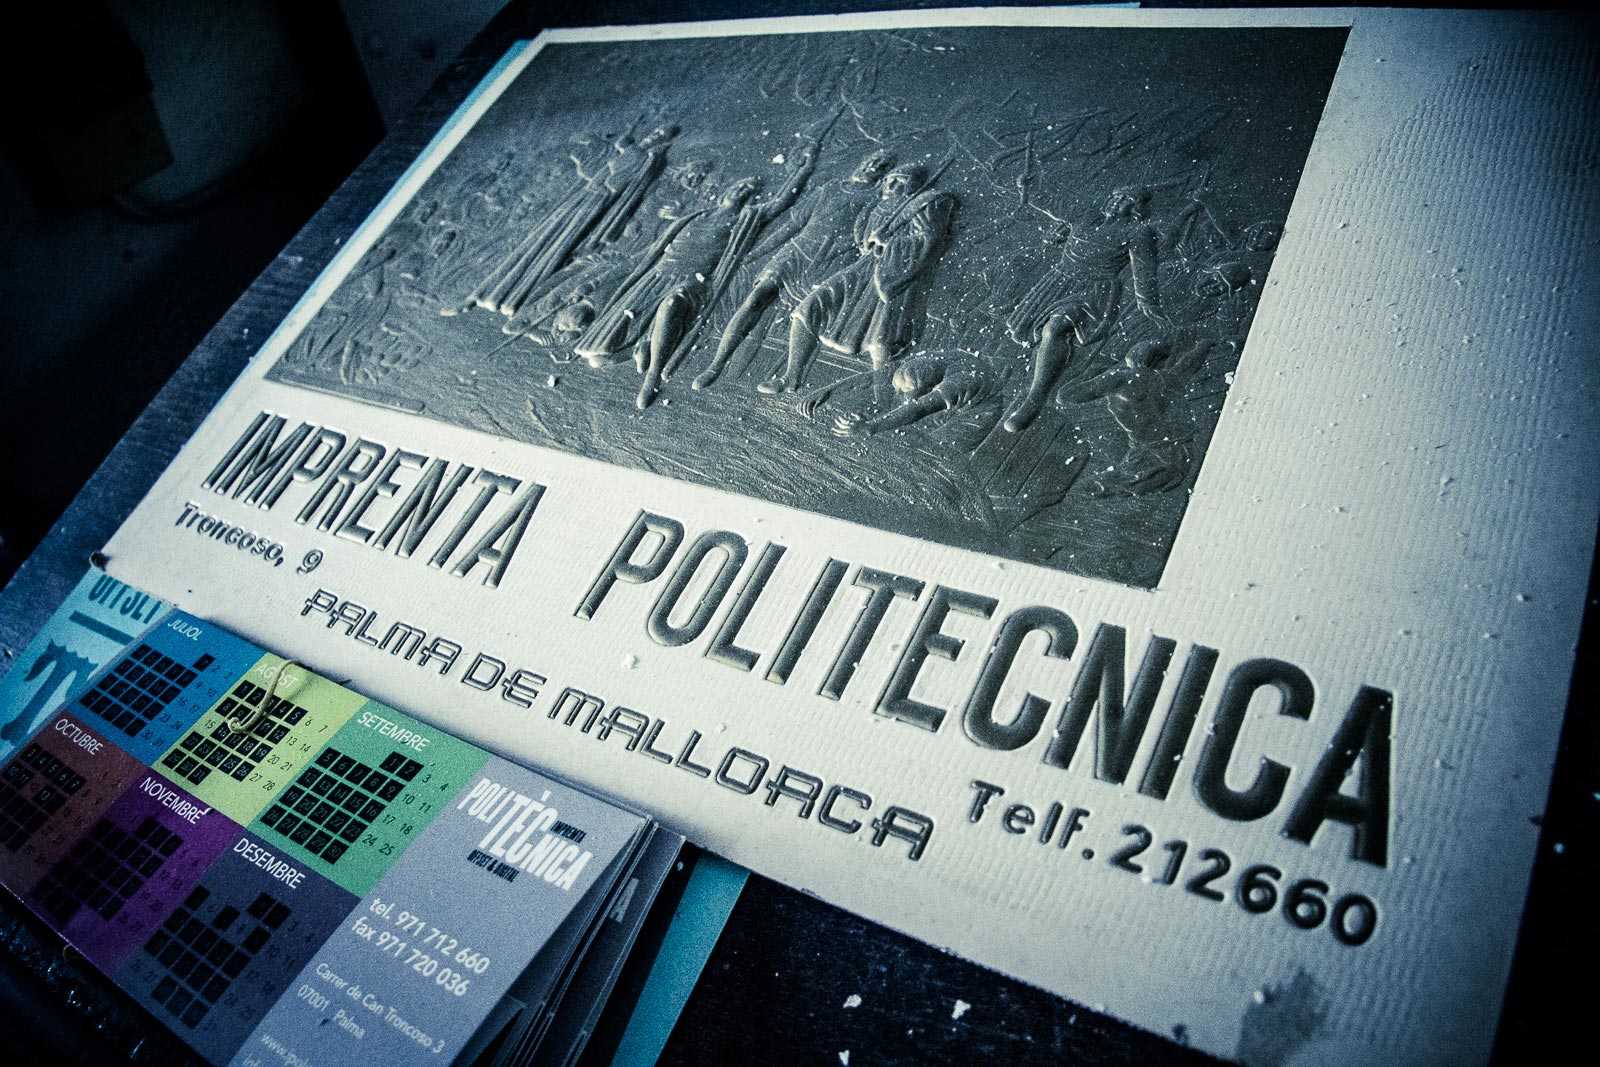 Impremta Politècnica © by matheu.es